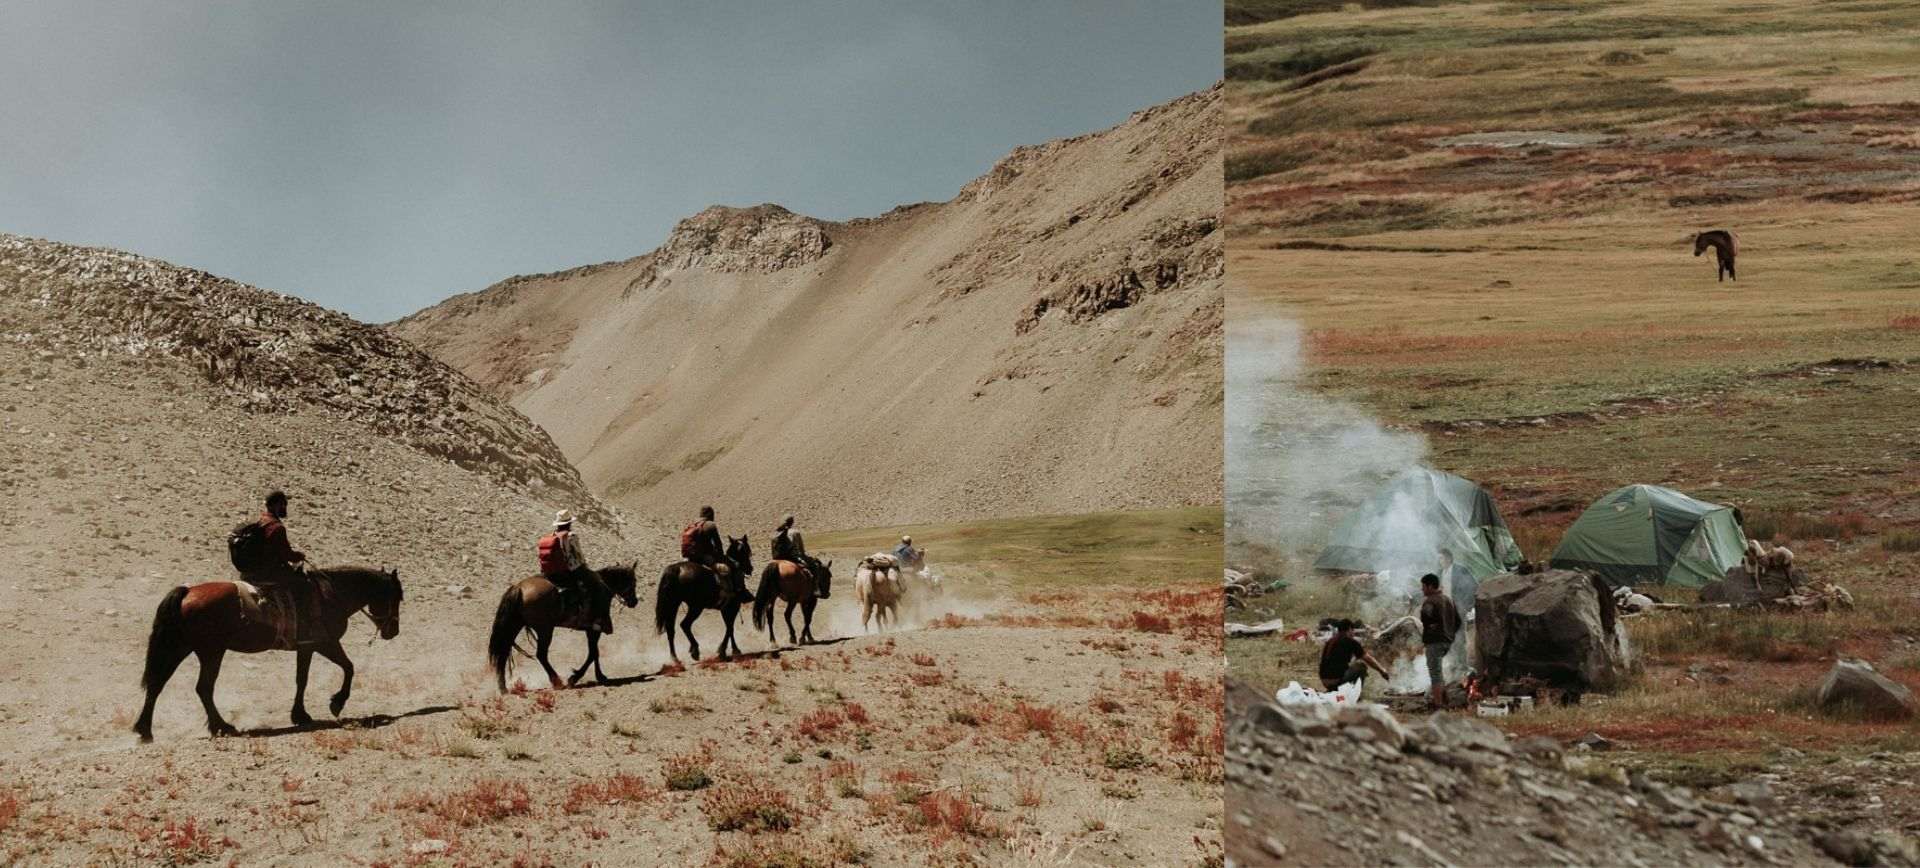 horseback wedding in patagonia - horse riding wedding in the mountains